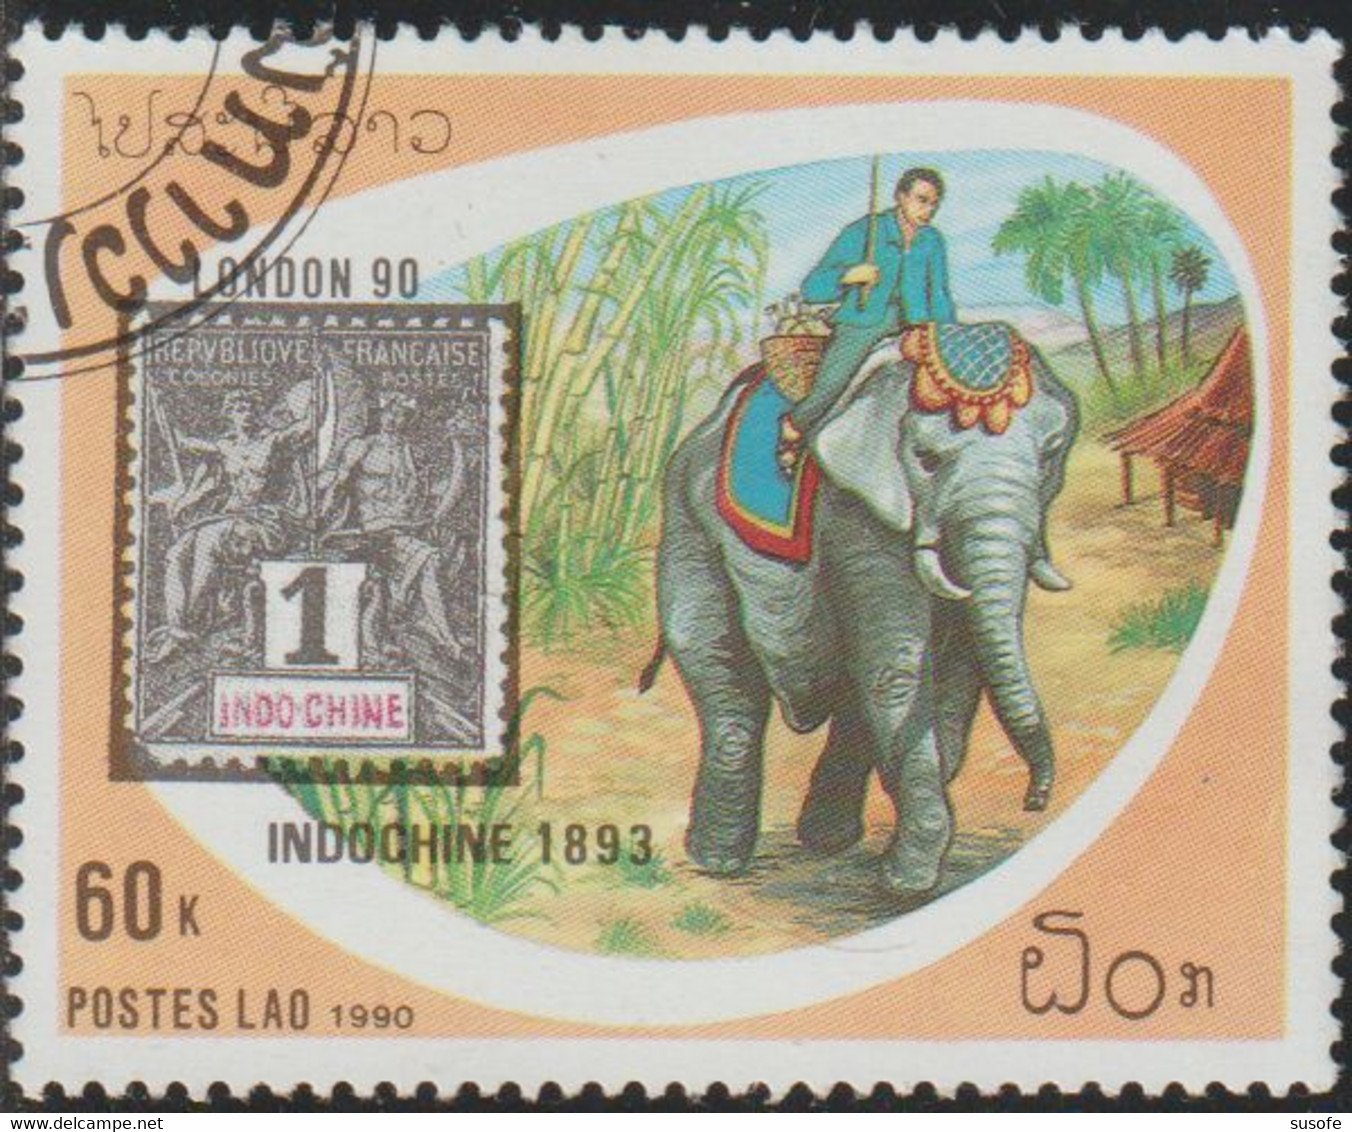 Laos 1990 Scott 1013 Sello * Dia Mundial Sello Londres Indo-China 1892 1c. Stamp And Elephant Michel 1204 Yvert 957 - Laos